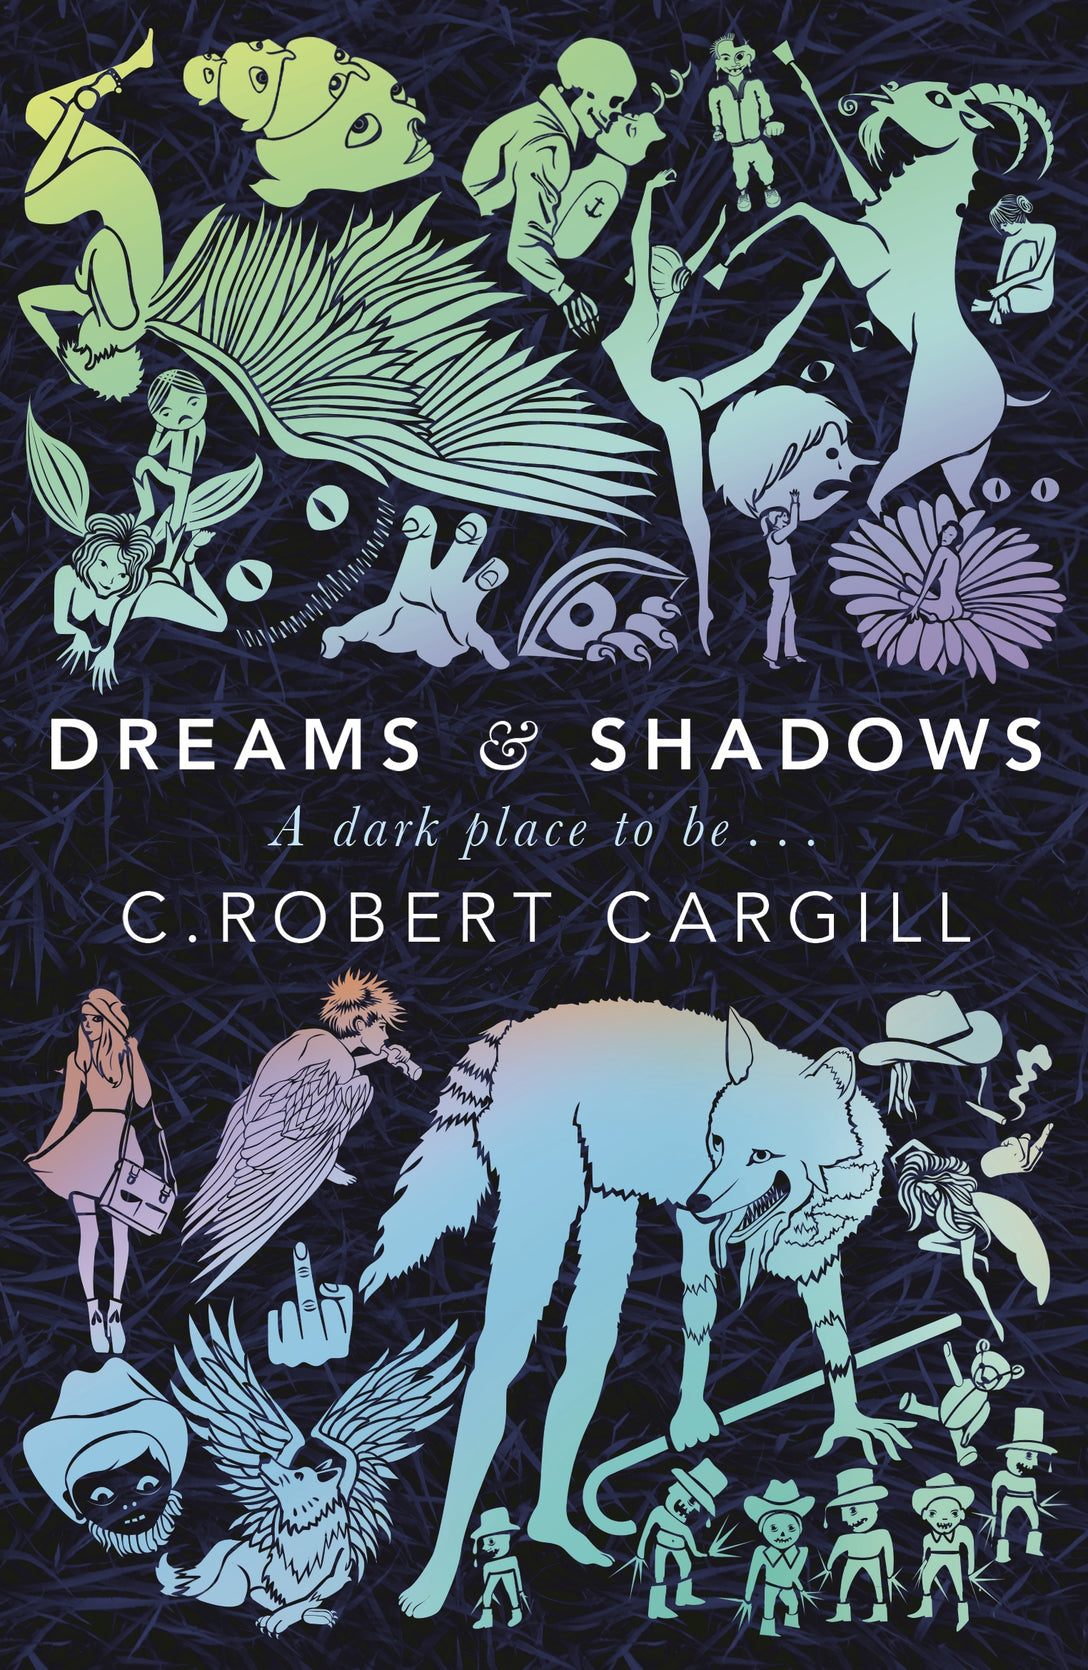 Dreams and Shadows by C. Robert Cargill